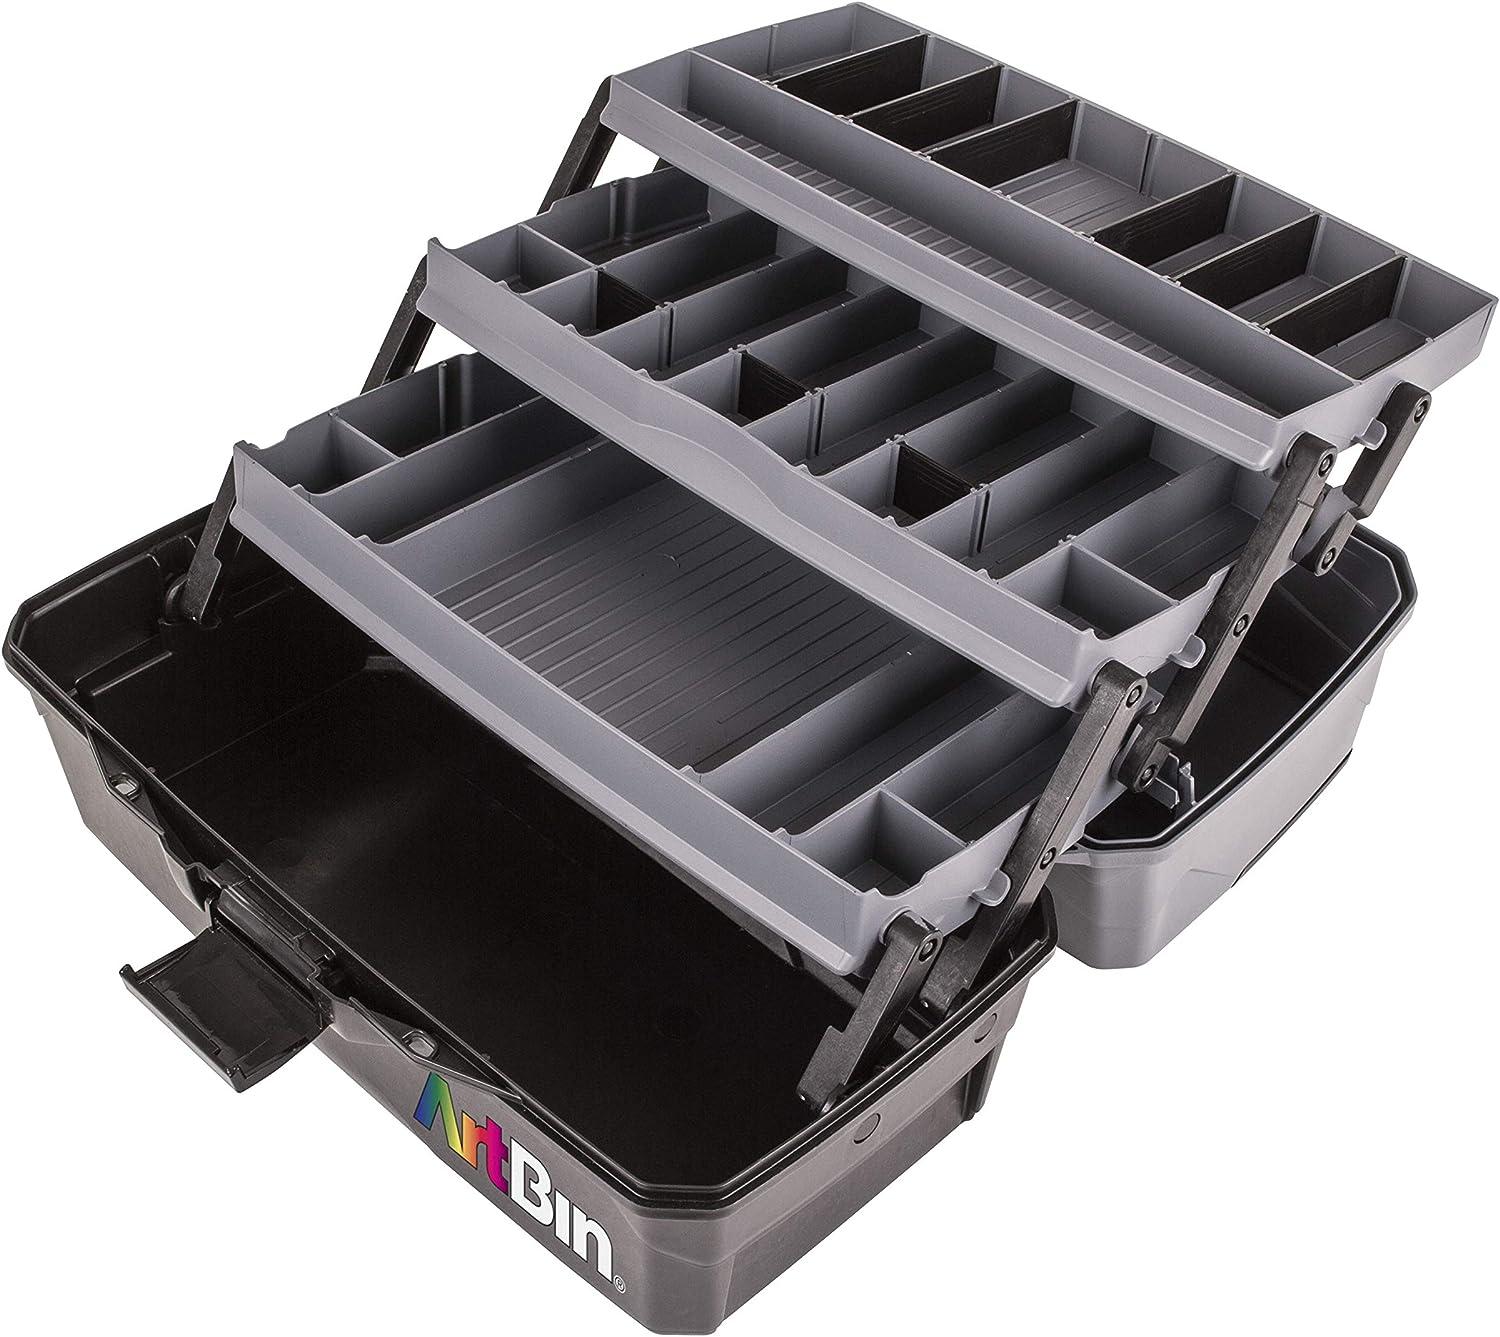 ArtBin Lift Out Tray Boxes